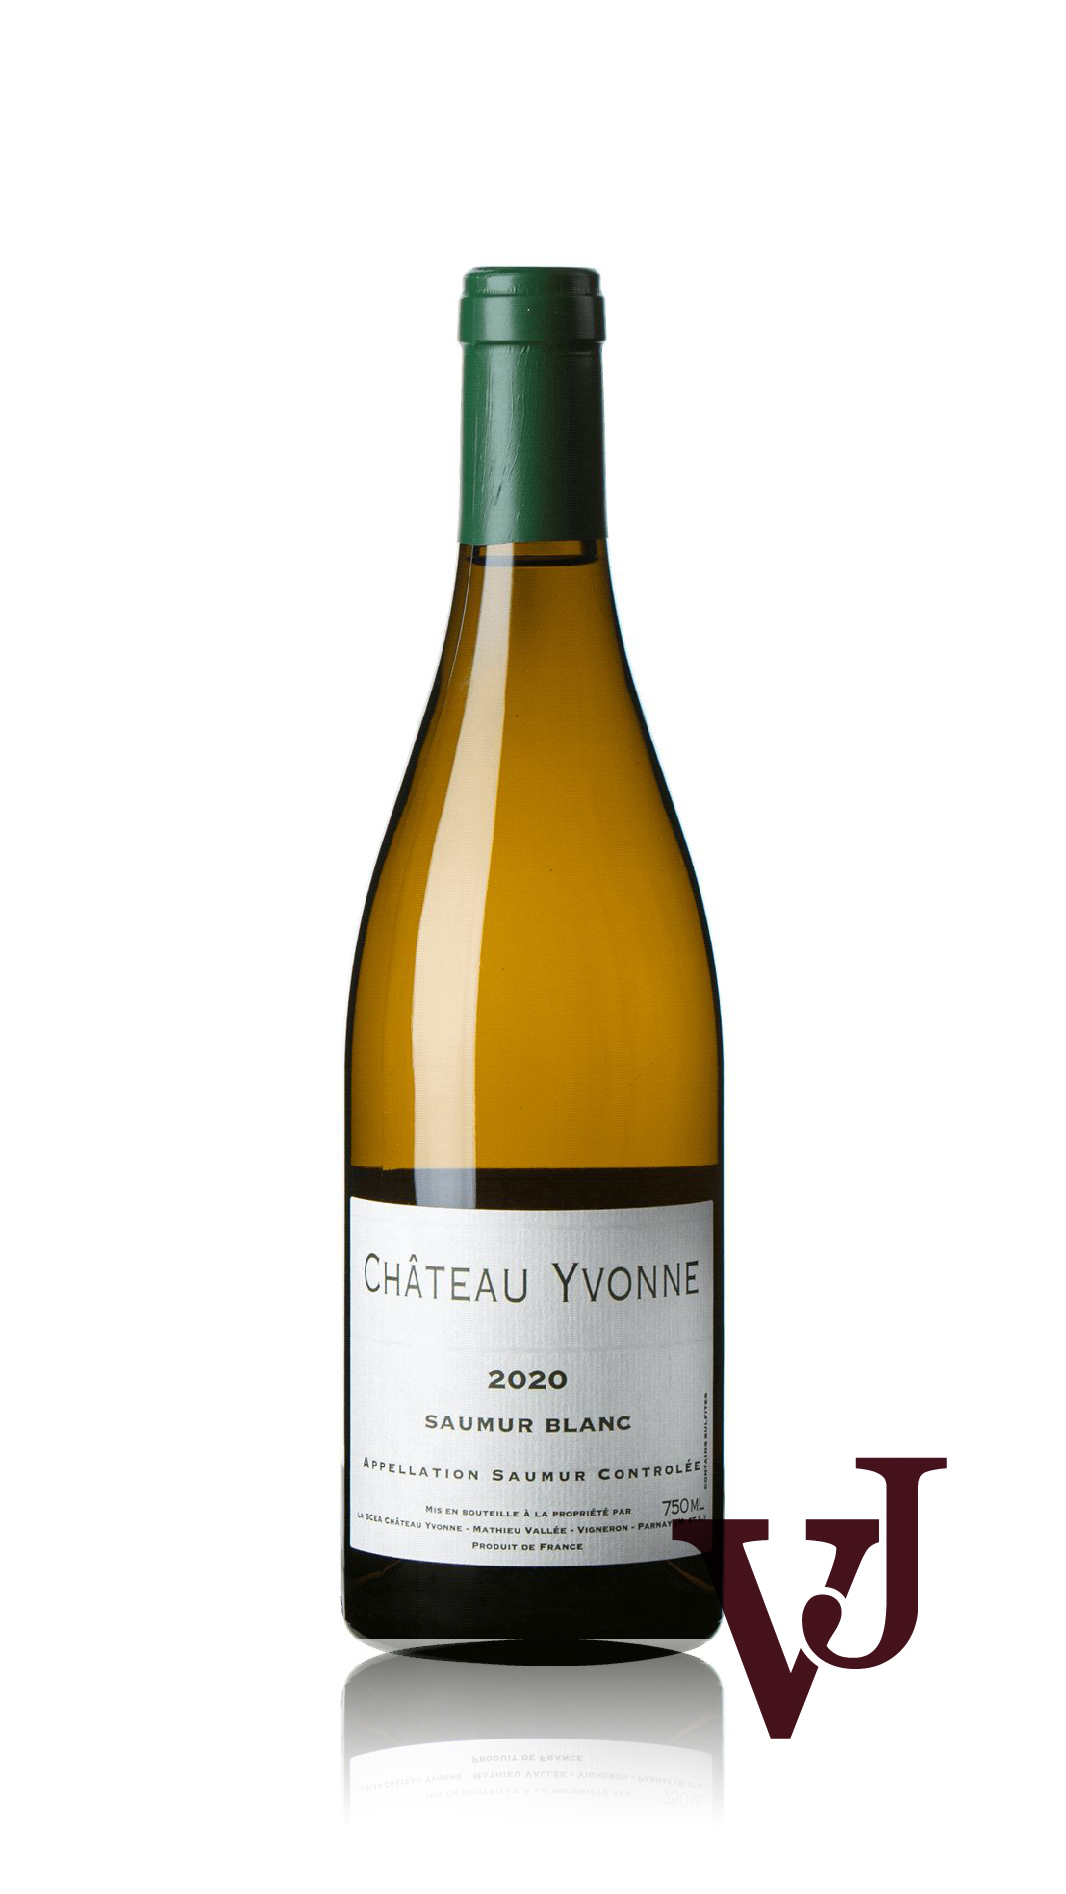 Vitt Vin - Château Yvonne Saumur blanc 2020 artikel nummer 9515301 från producenten Château Yvonne från området Frankrike